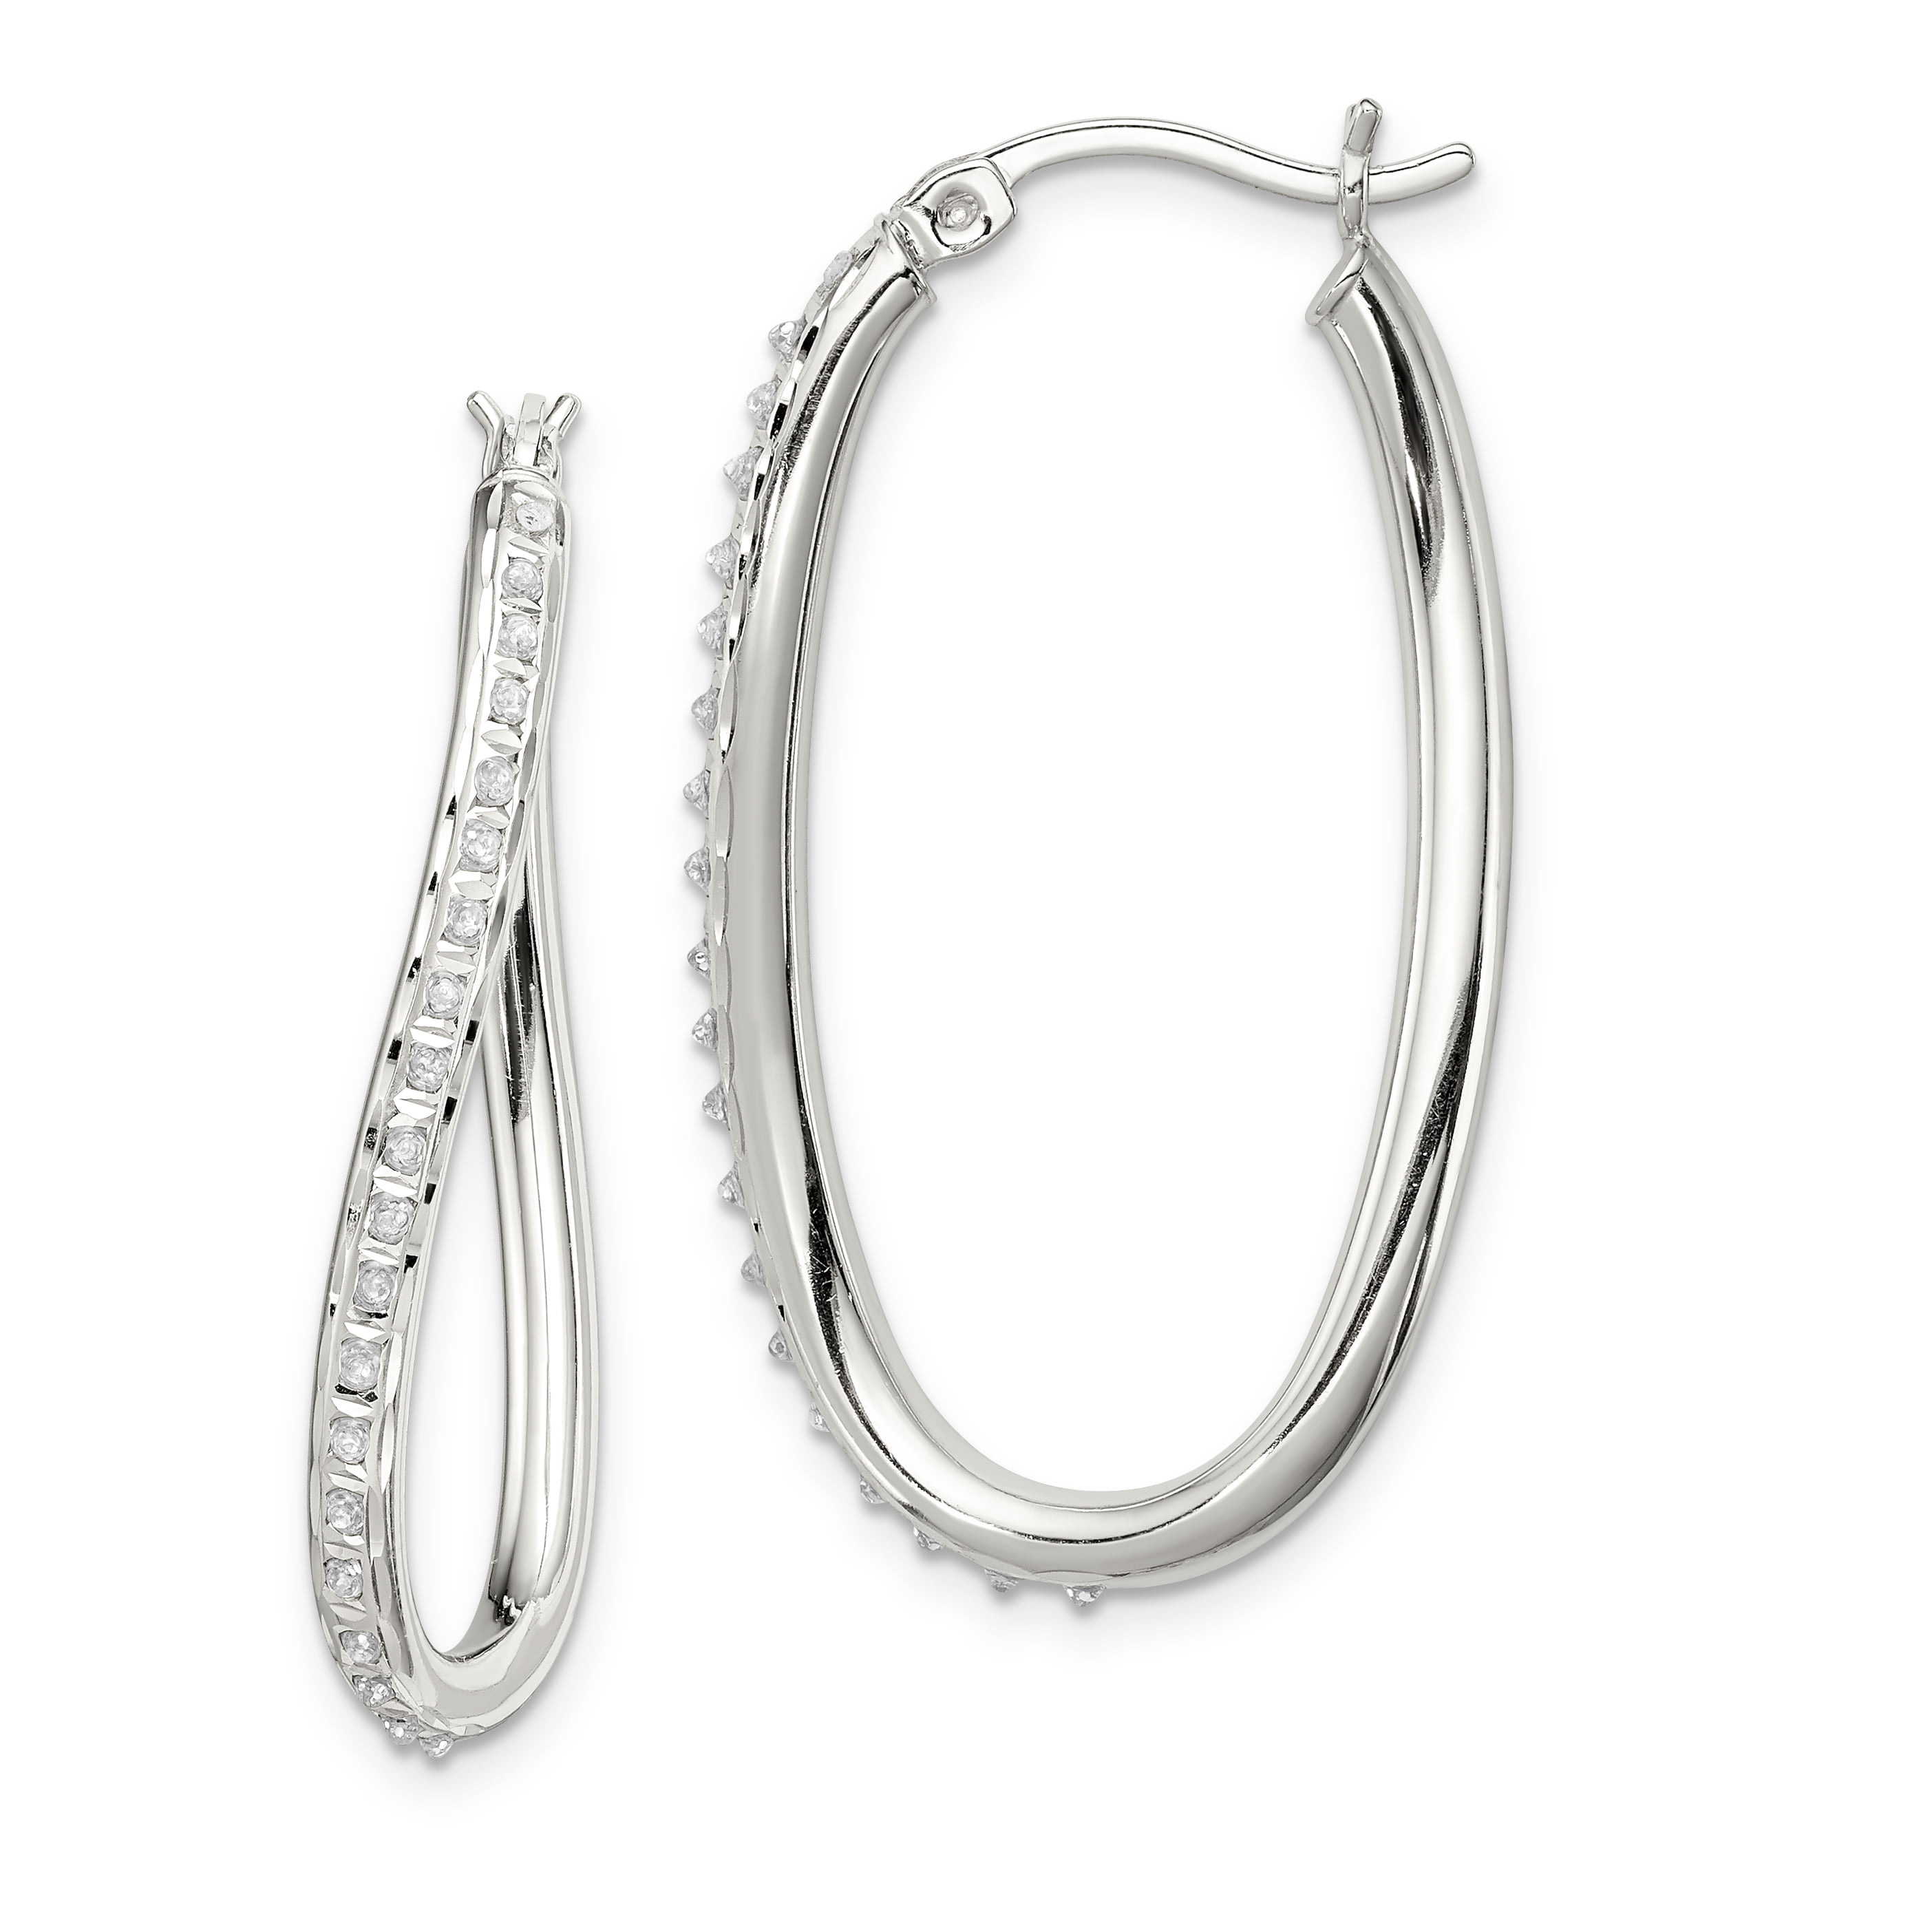 Platinum plated huggie hoops Hole: 18mm jewellery findings 14.7x11.7mm silver lever back earrings with loop real silver earrings